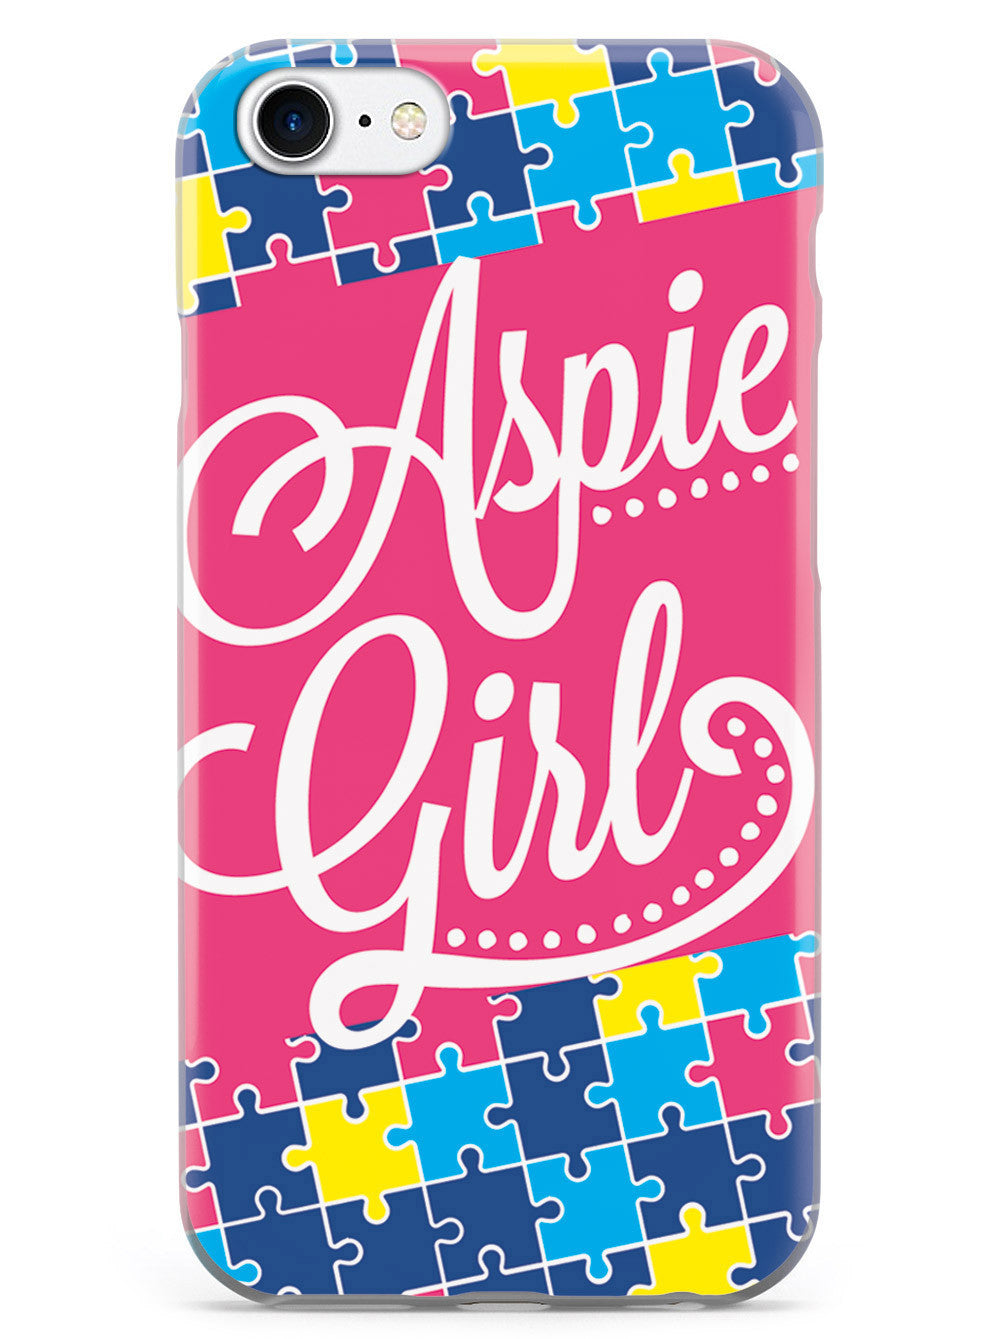 Aspie Girl - Asperger's Syndrome Case